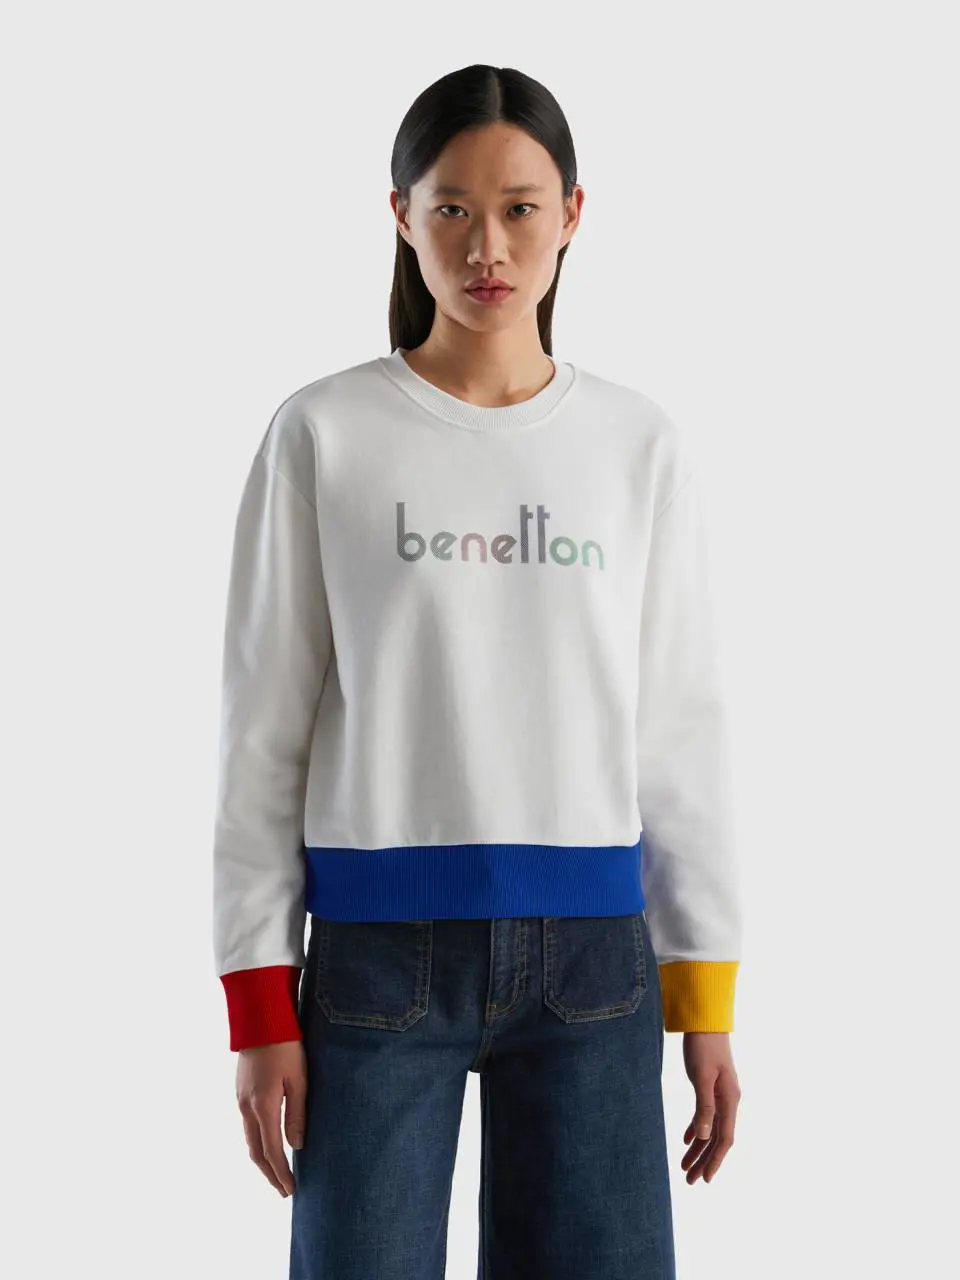 Benetton 100% cotton sweatshirt with logo print. 1